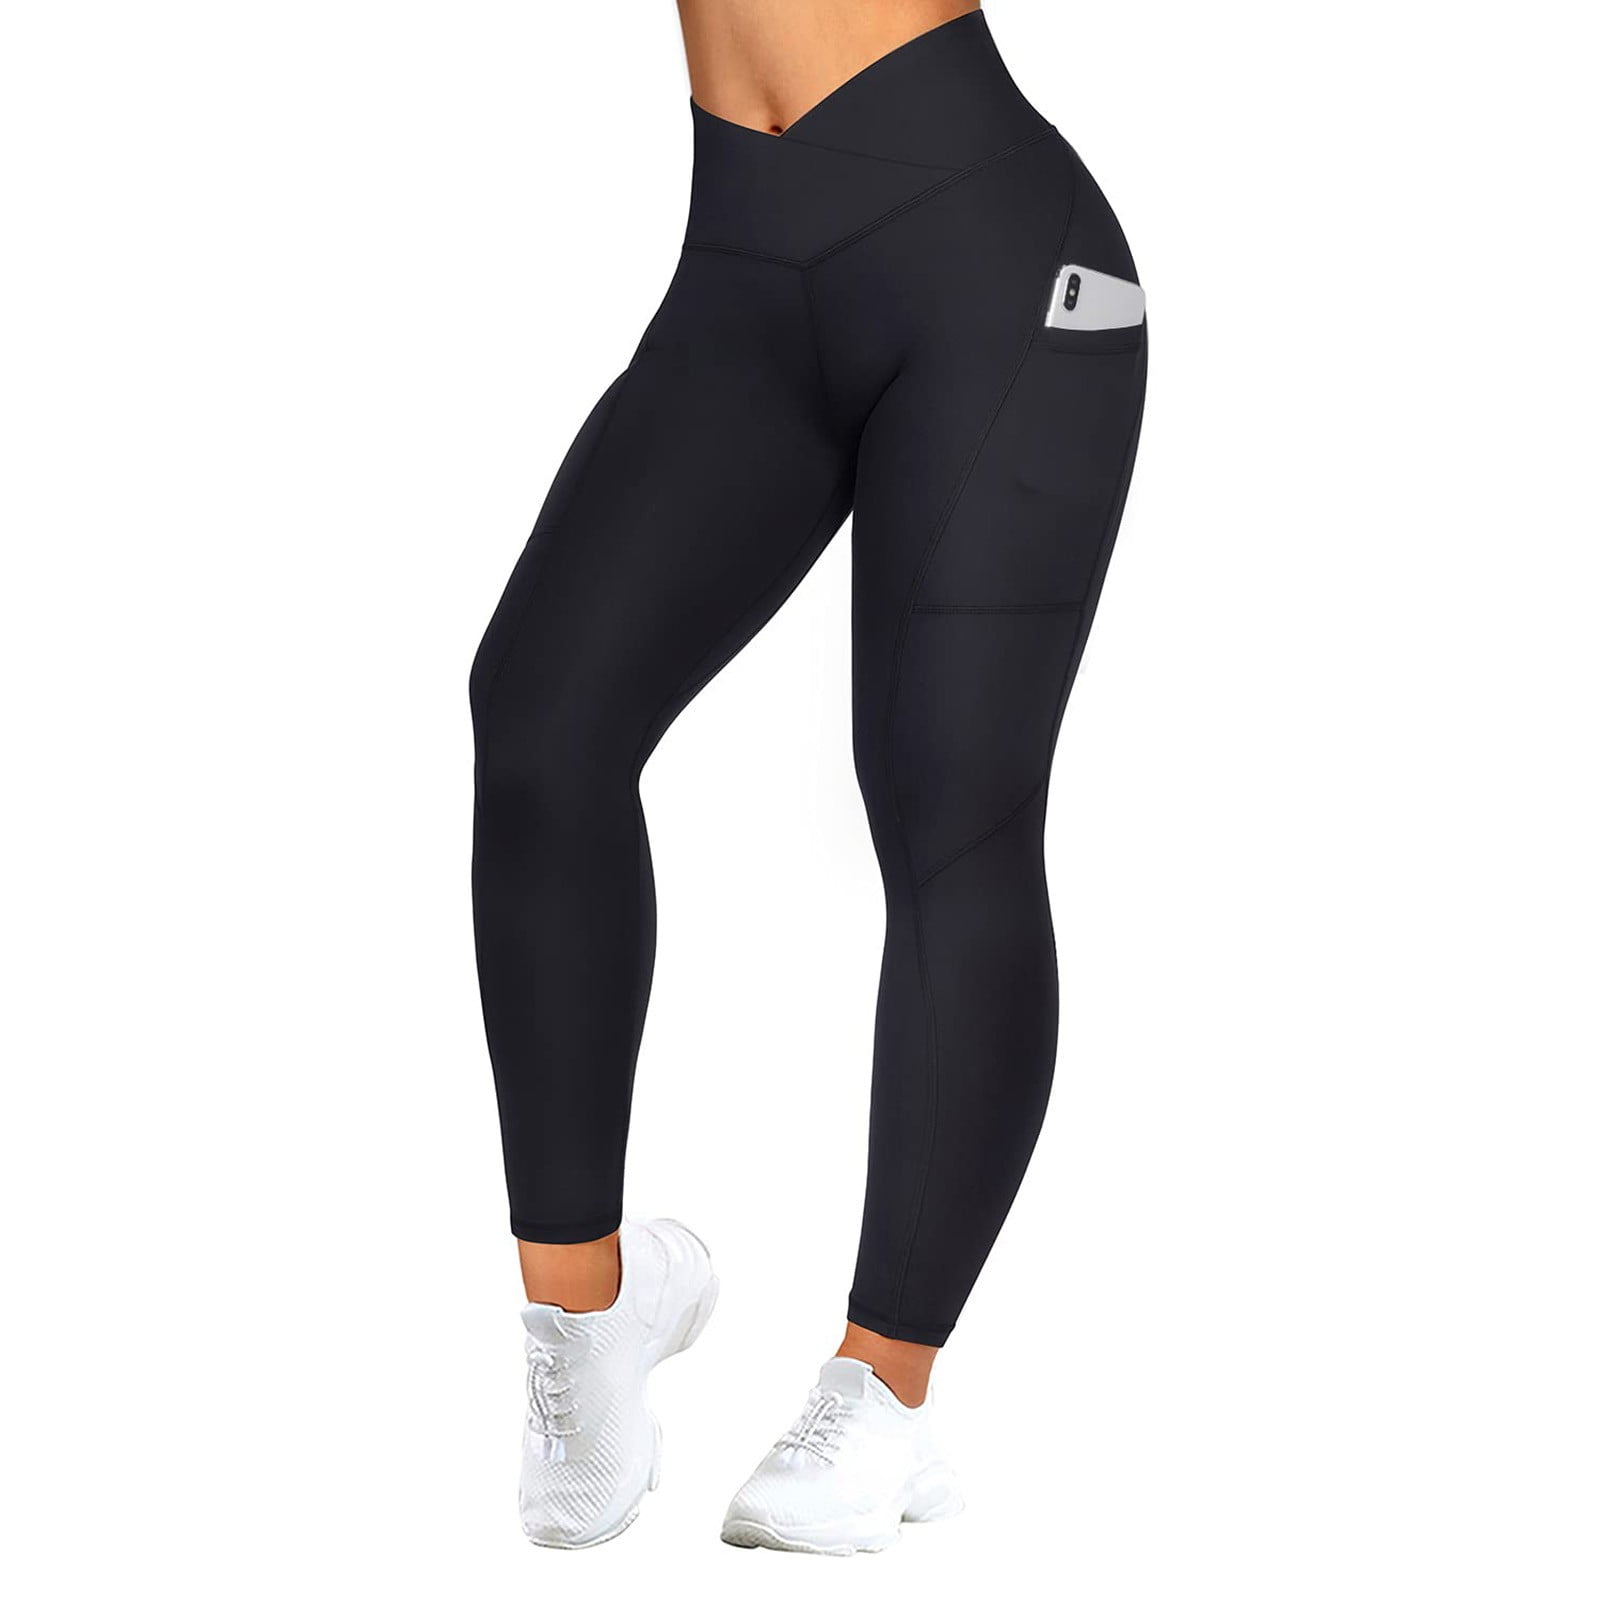 Buy WEARJUKEBOX Women's Designer Sports Leggings (Black)- Active & Gym Wear  at Amazon.in